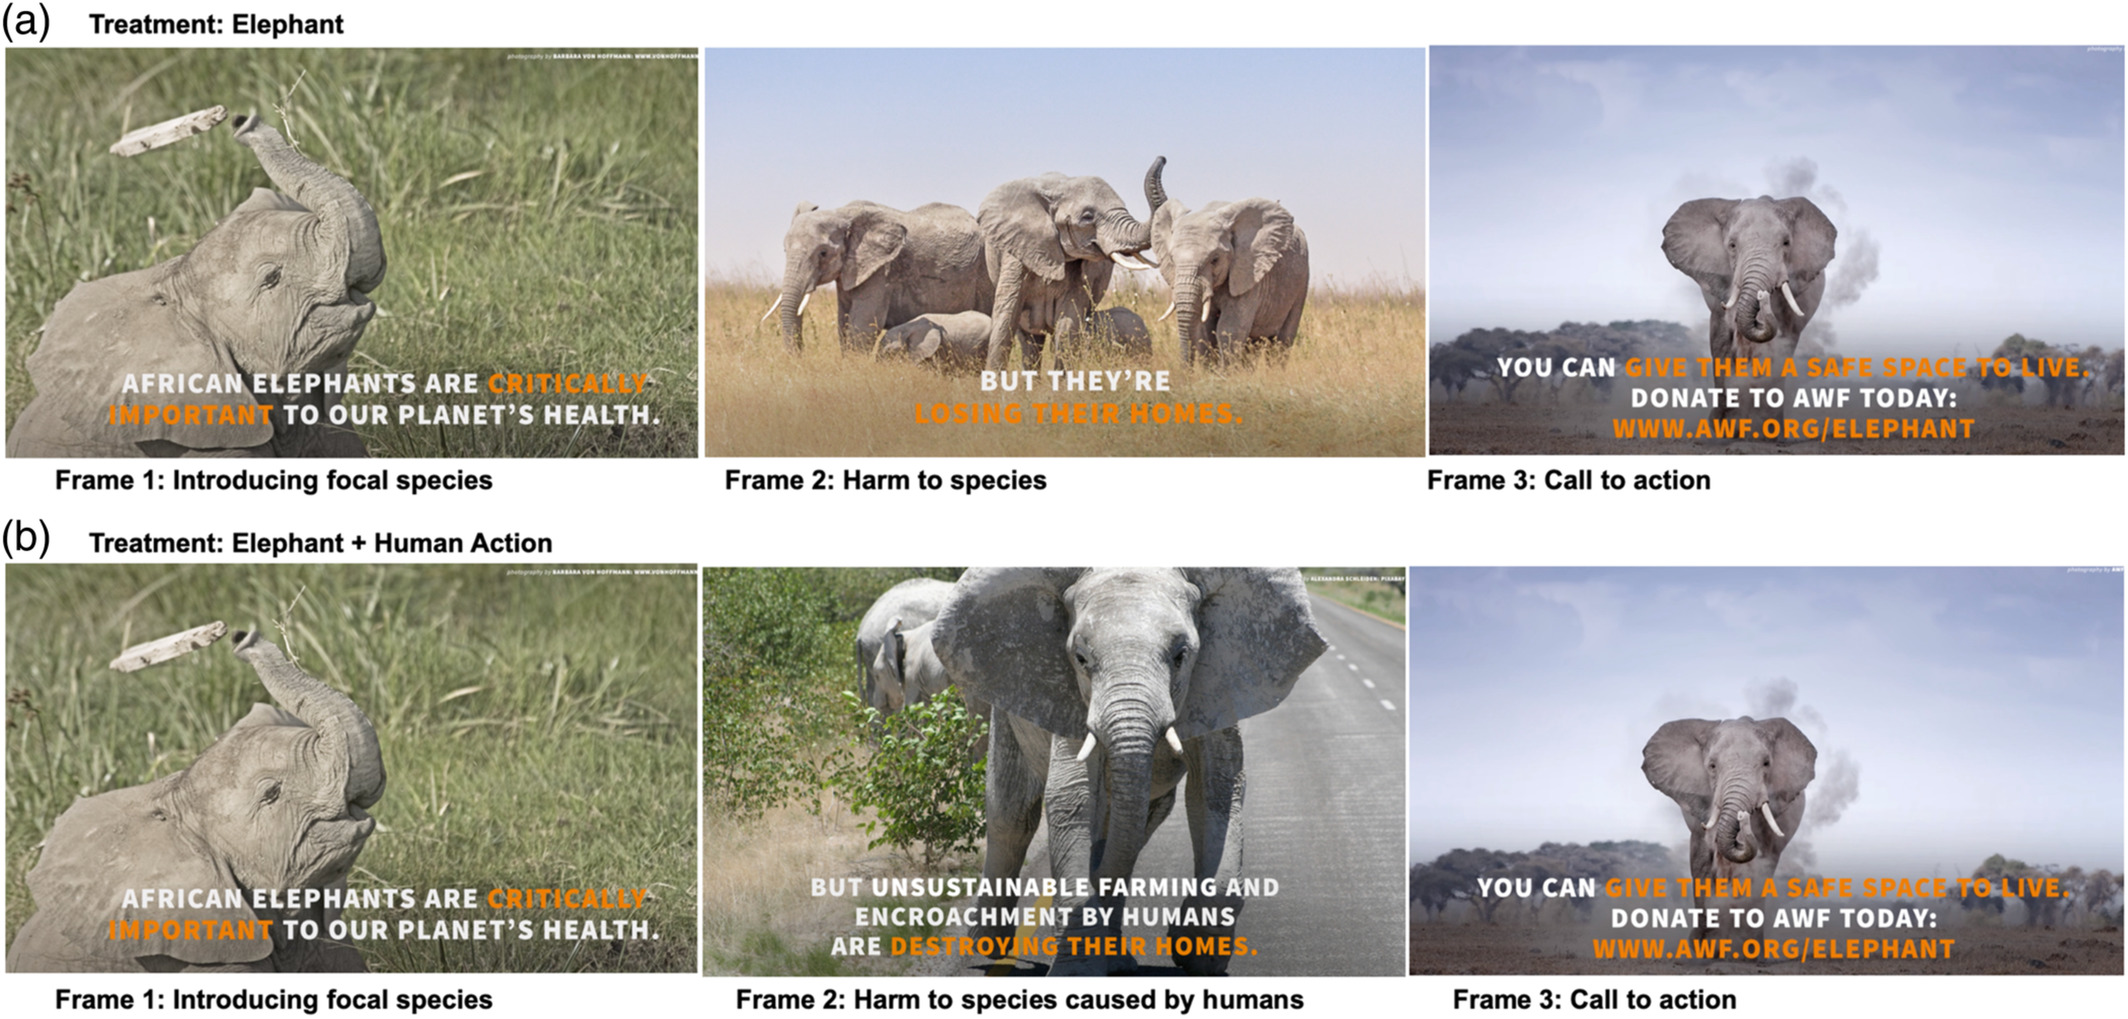 Shreedhar_Engagement with Wildlife Conservation Facebook Ads_Sept 2021_unsized